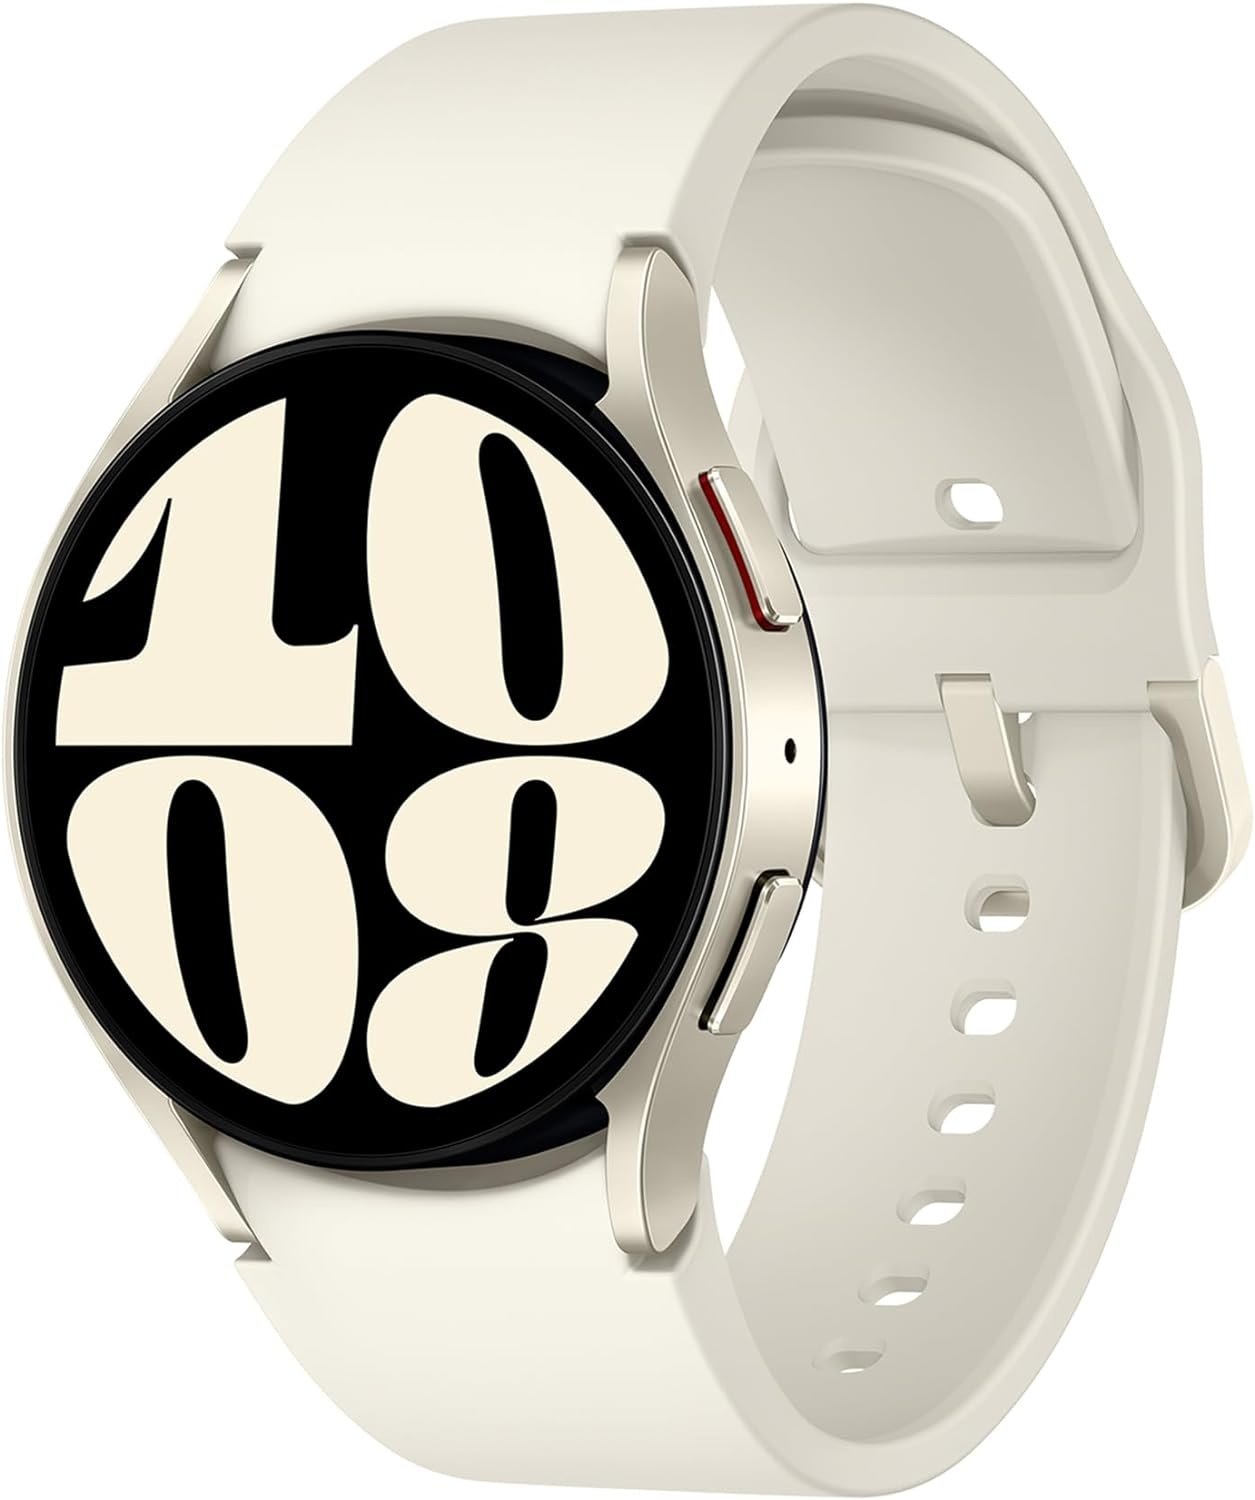 Samsung Galaxy Watch 6 [WiFi + LTE, inkl. Sportarmband beige] 40mm Aluminiumgehäuse gold (Neu differenzbesteuert)